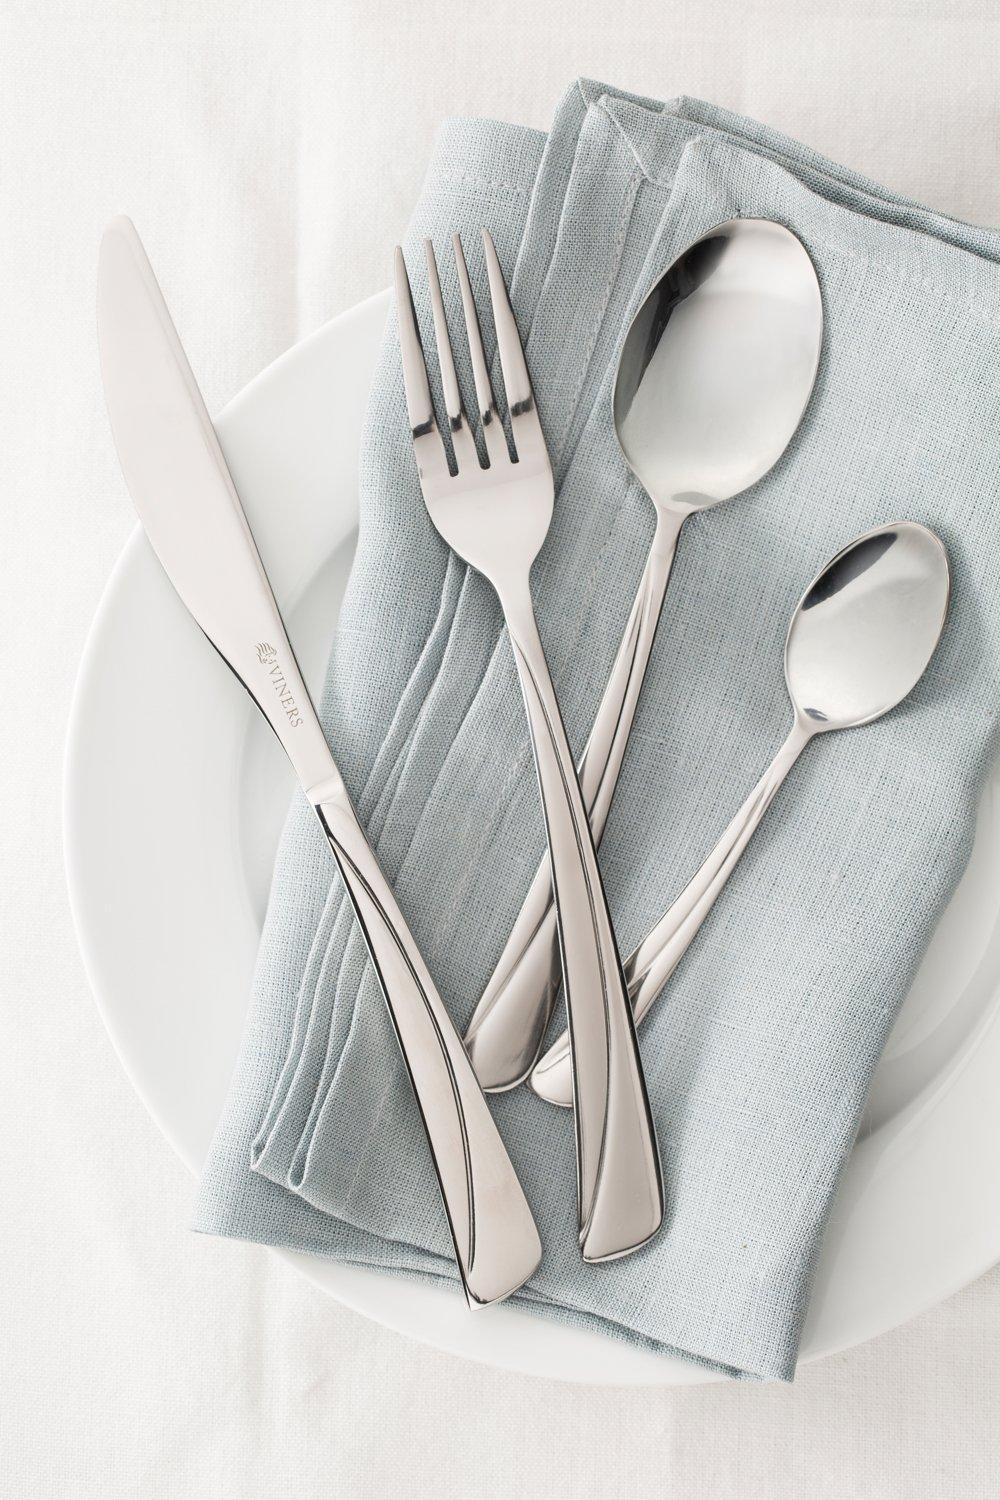 Viners 'Angel' 24 Piece Cutlery Set|silver